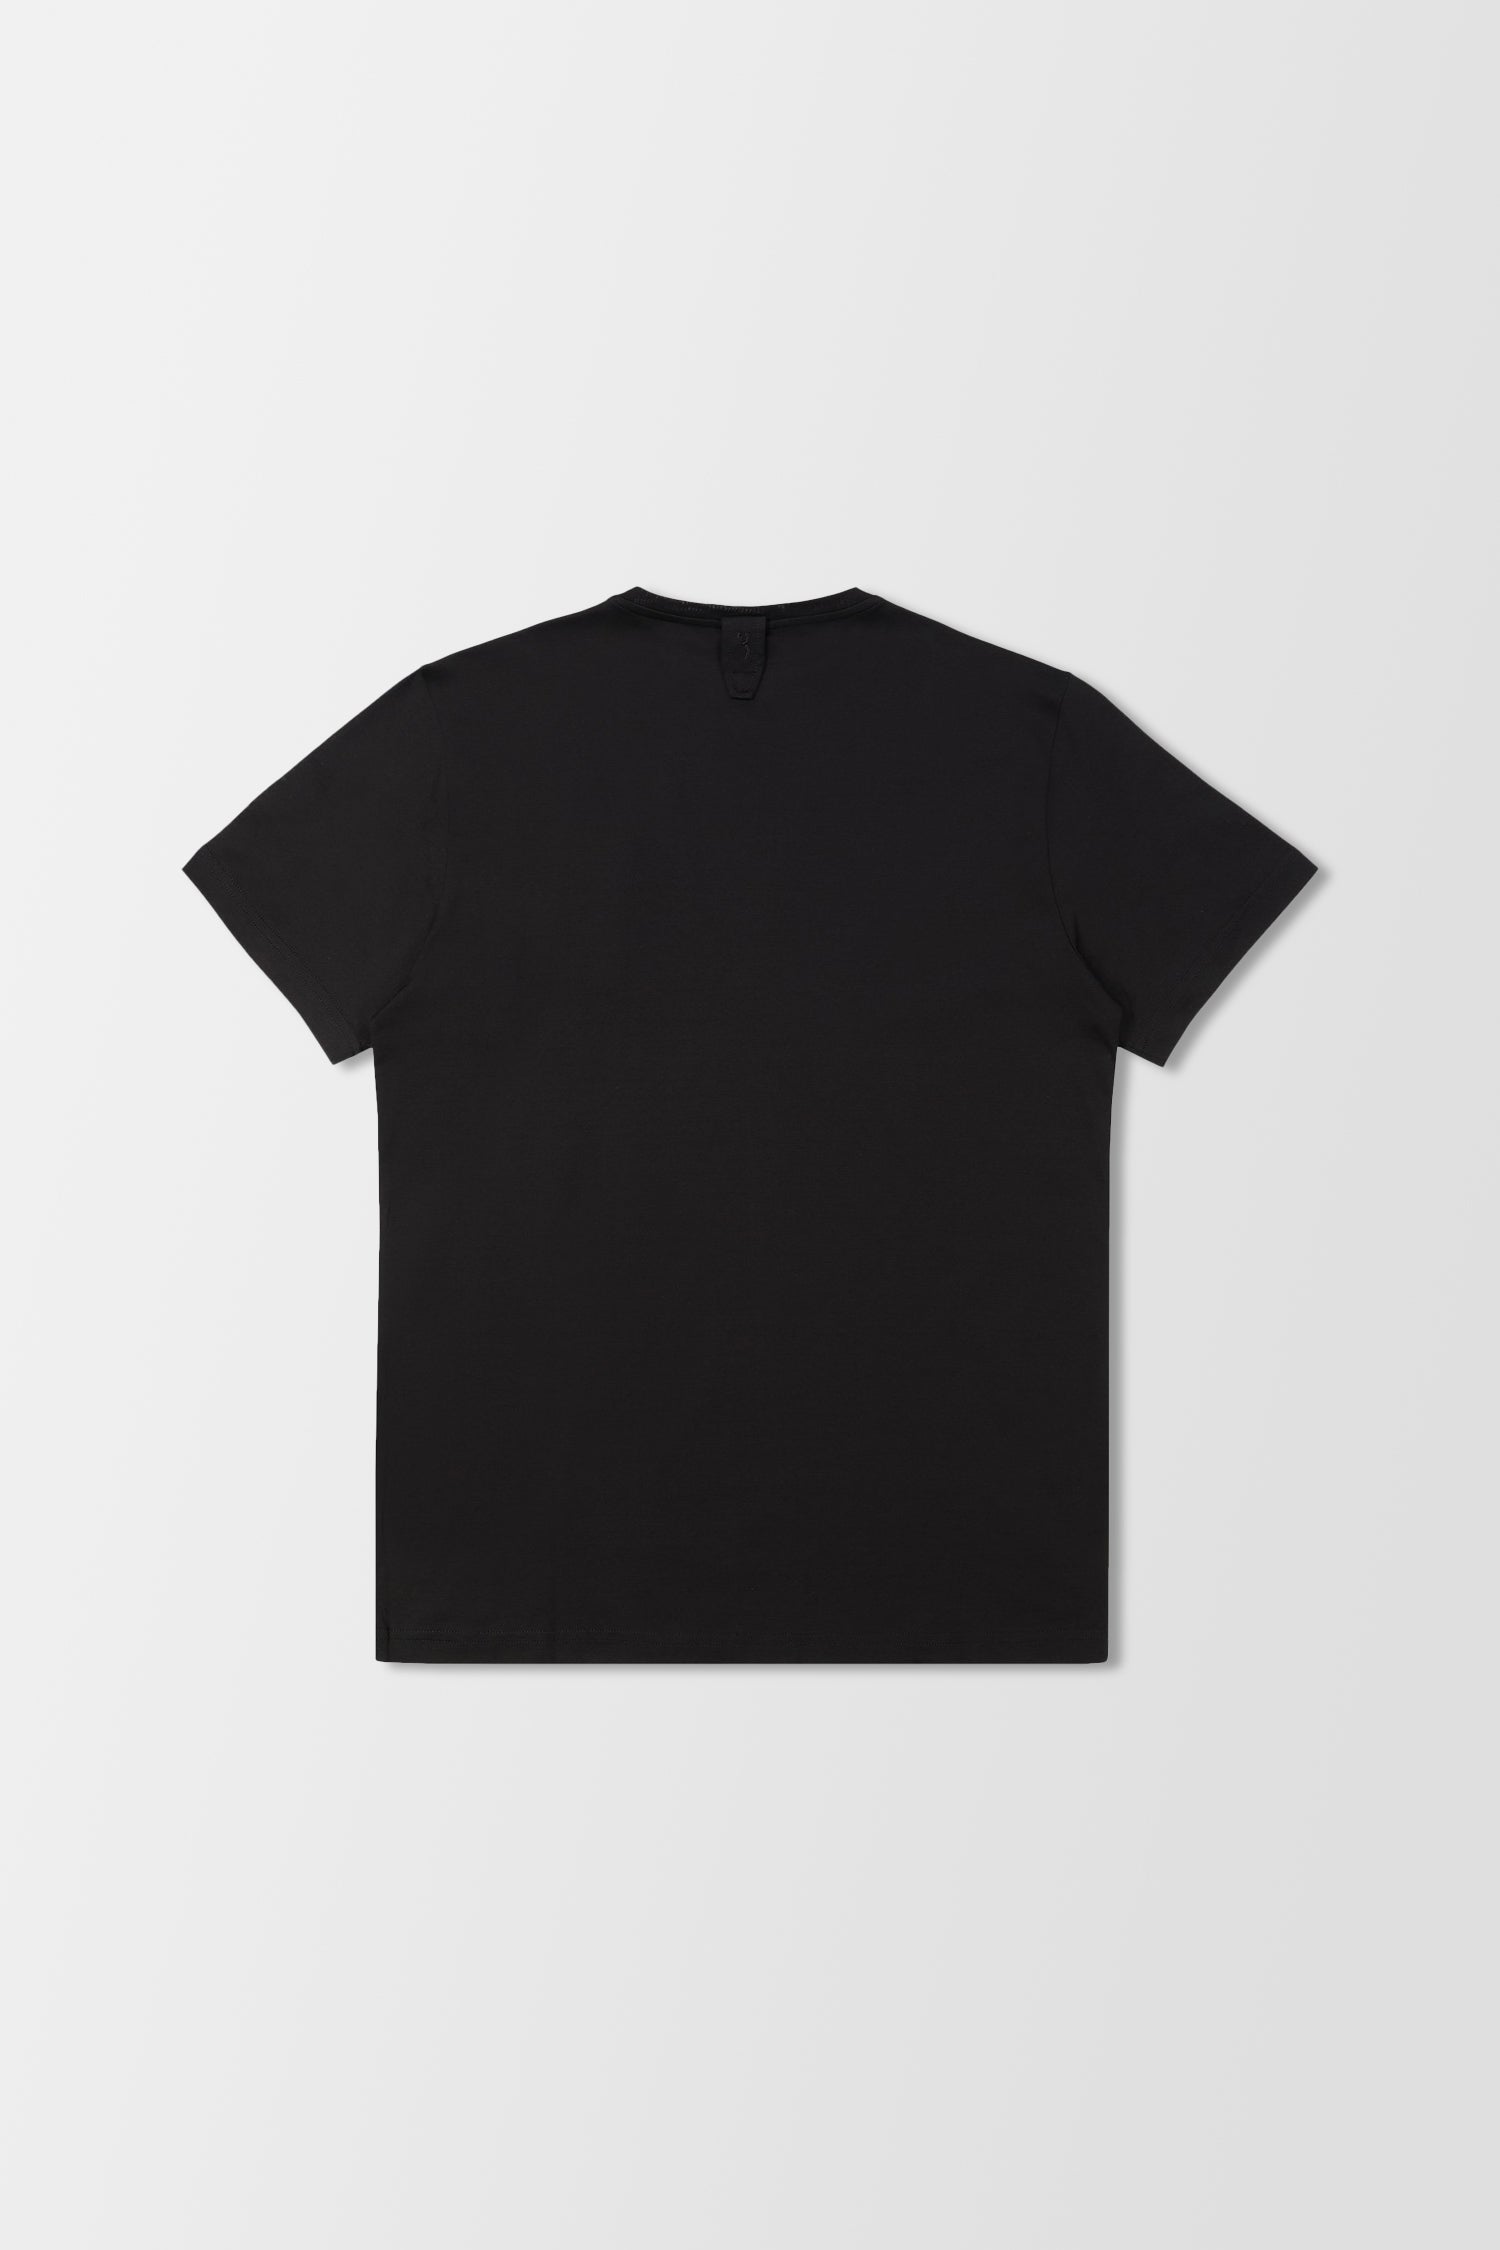 Billionaire Black SS Logos Round Neck T-Shirt